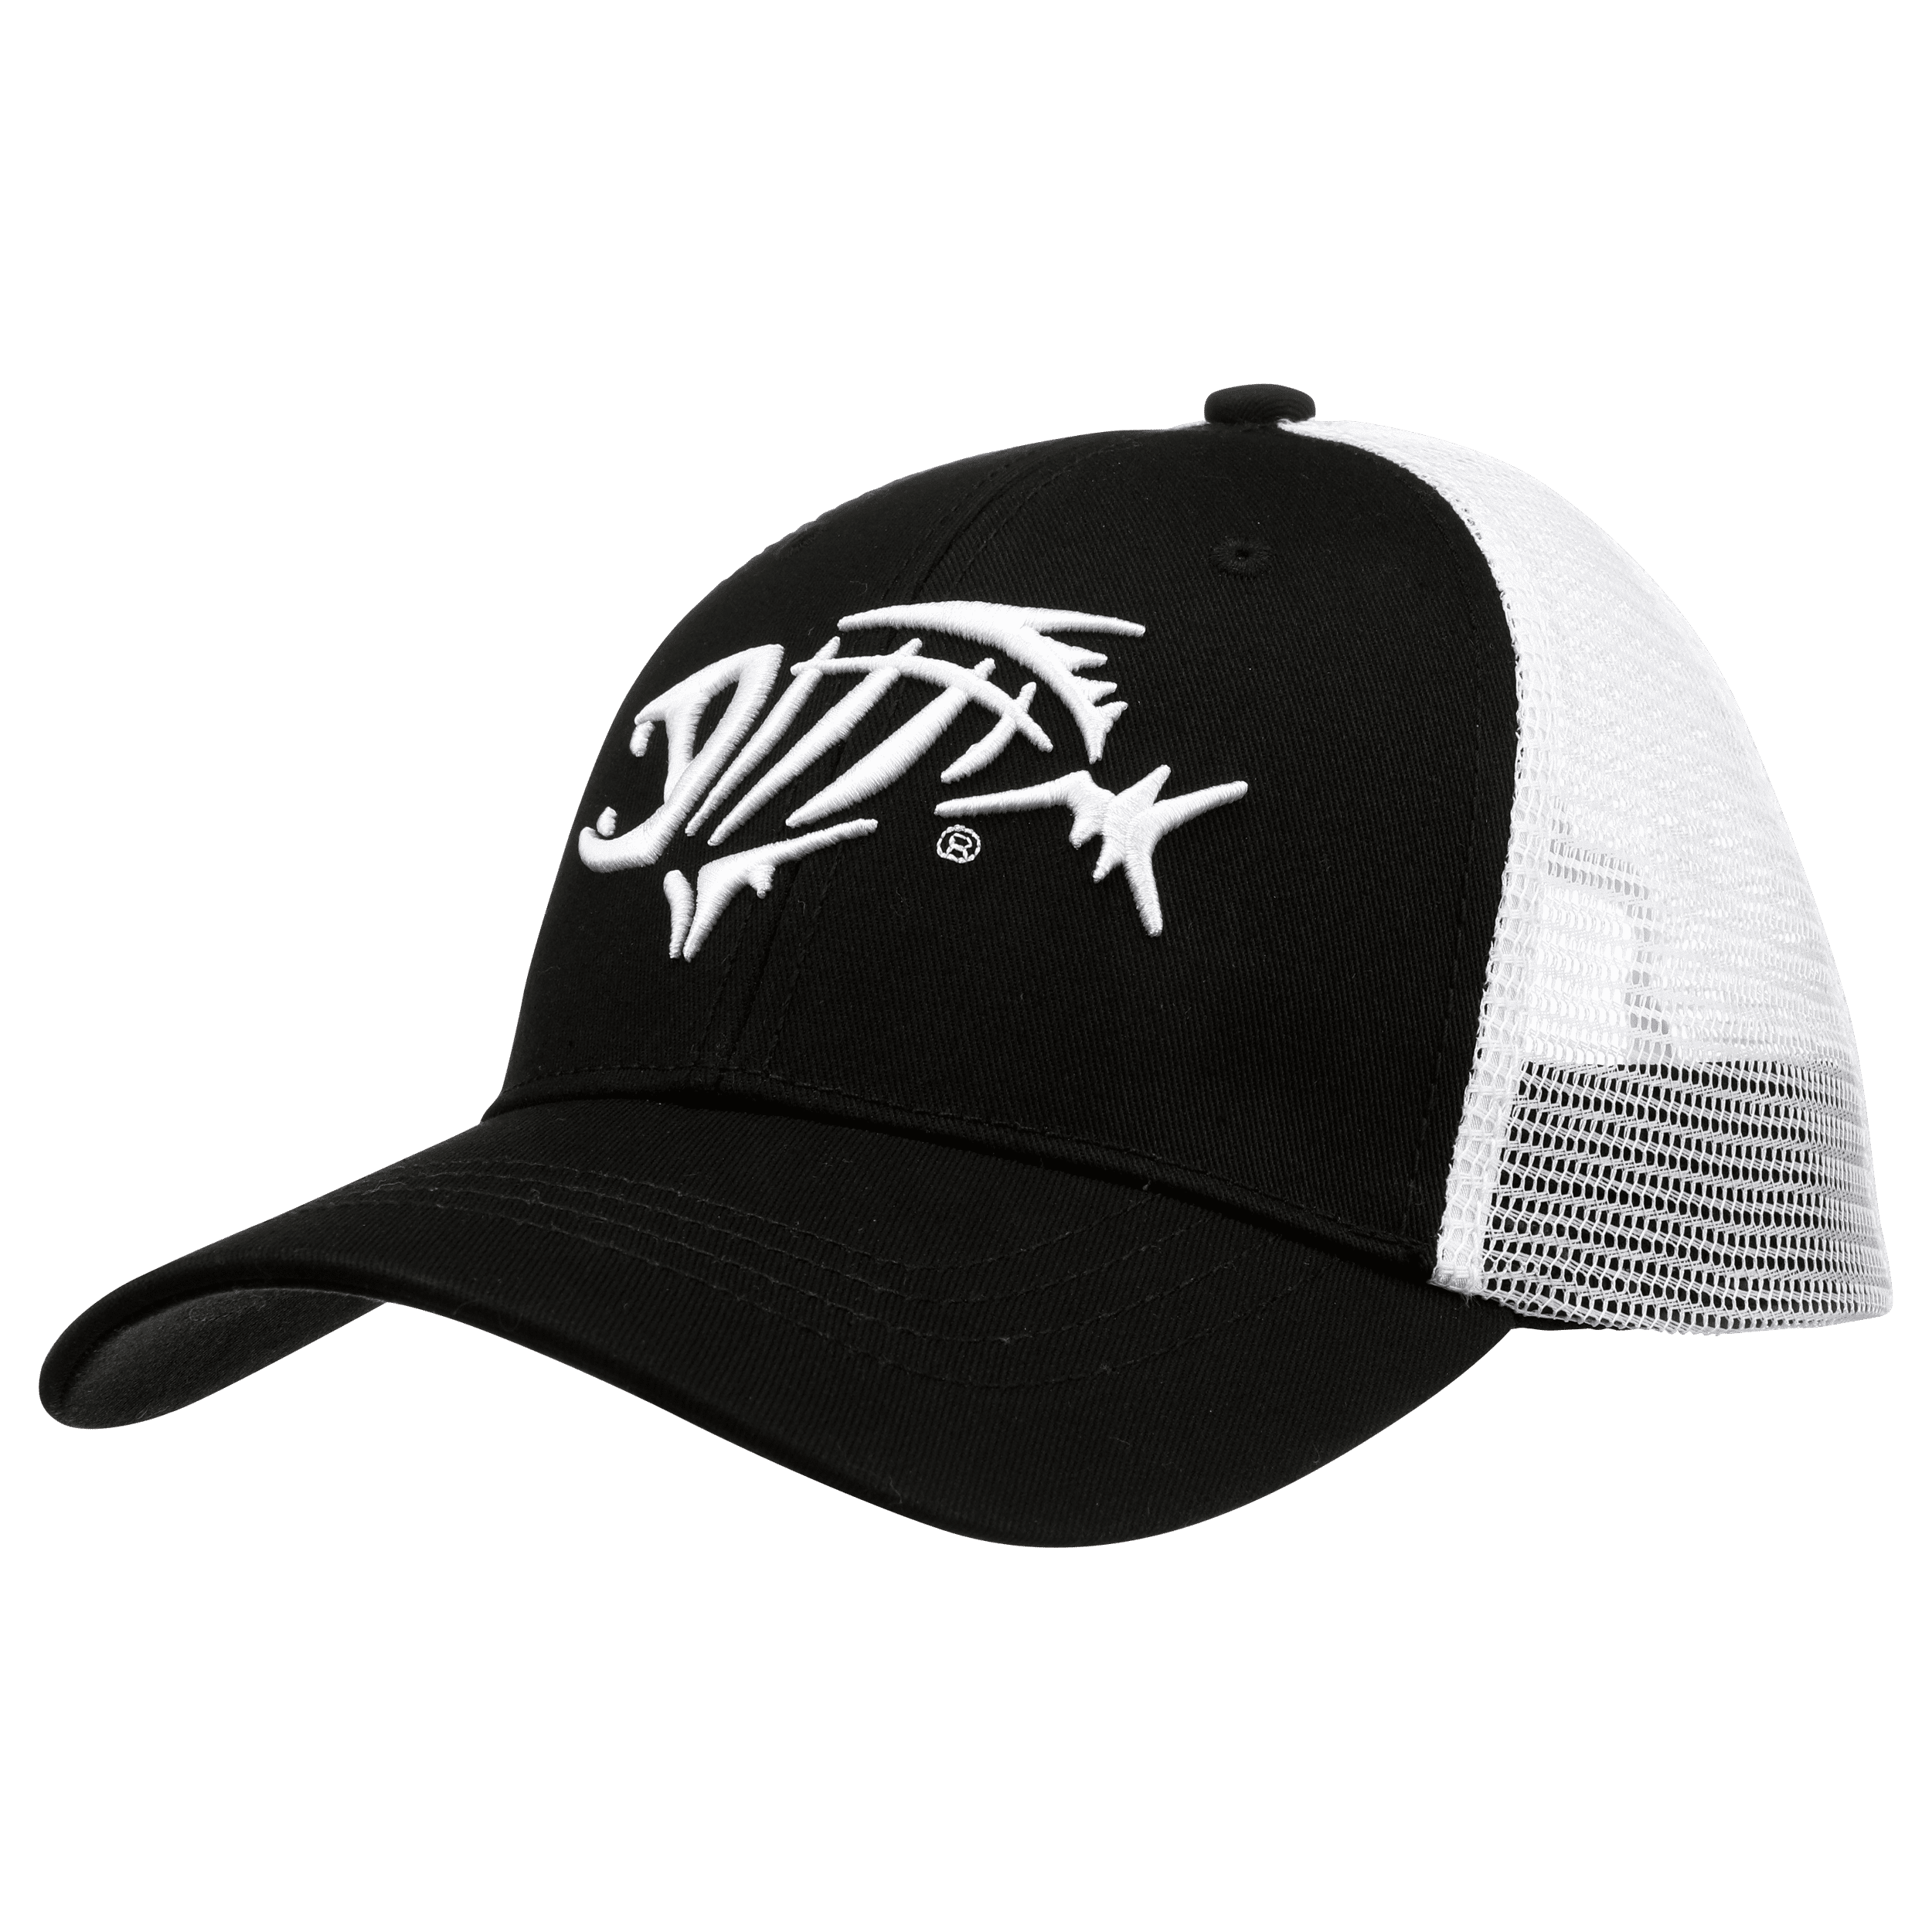 Gloomis Fishing Bandit Trucker Cap - Black, One Size Fits Most  [GHATBANTCBK] 